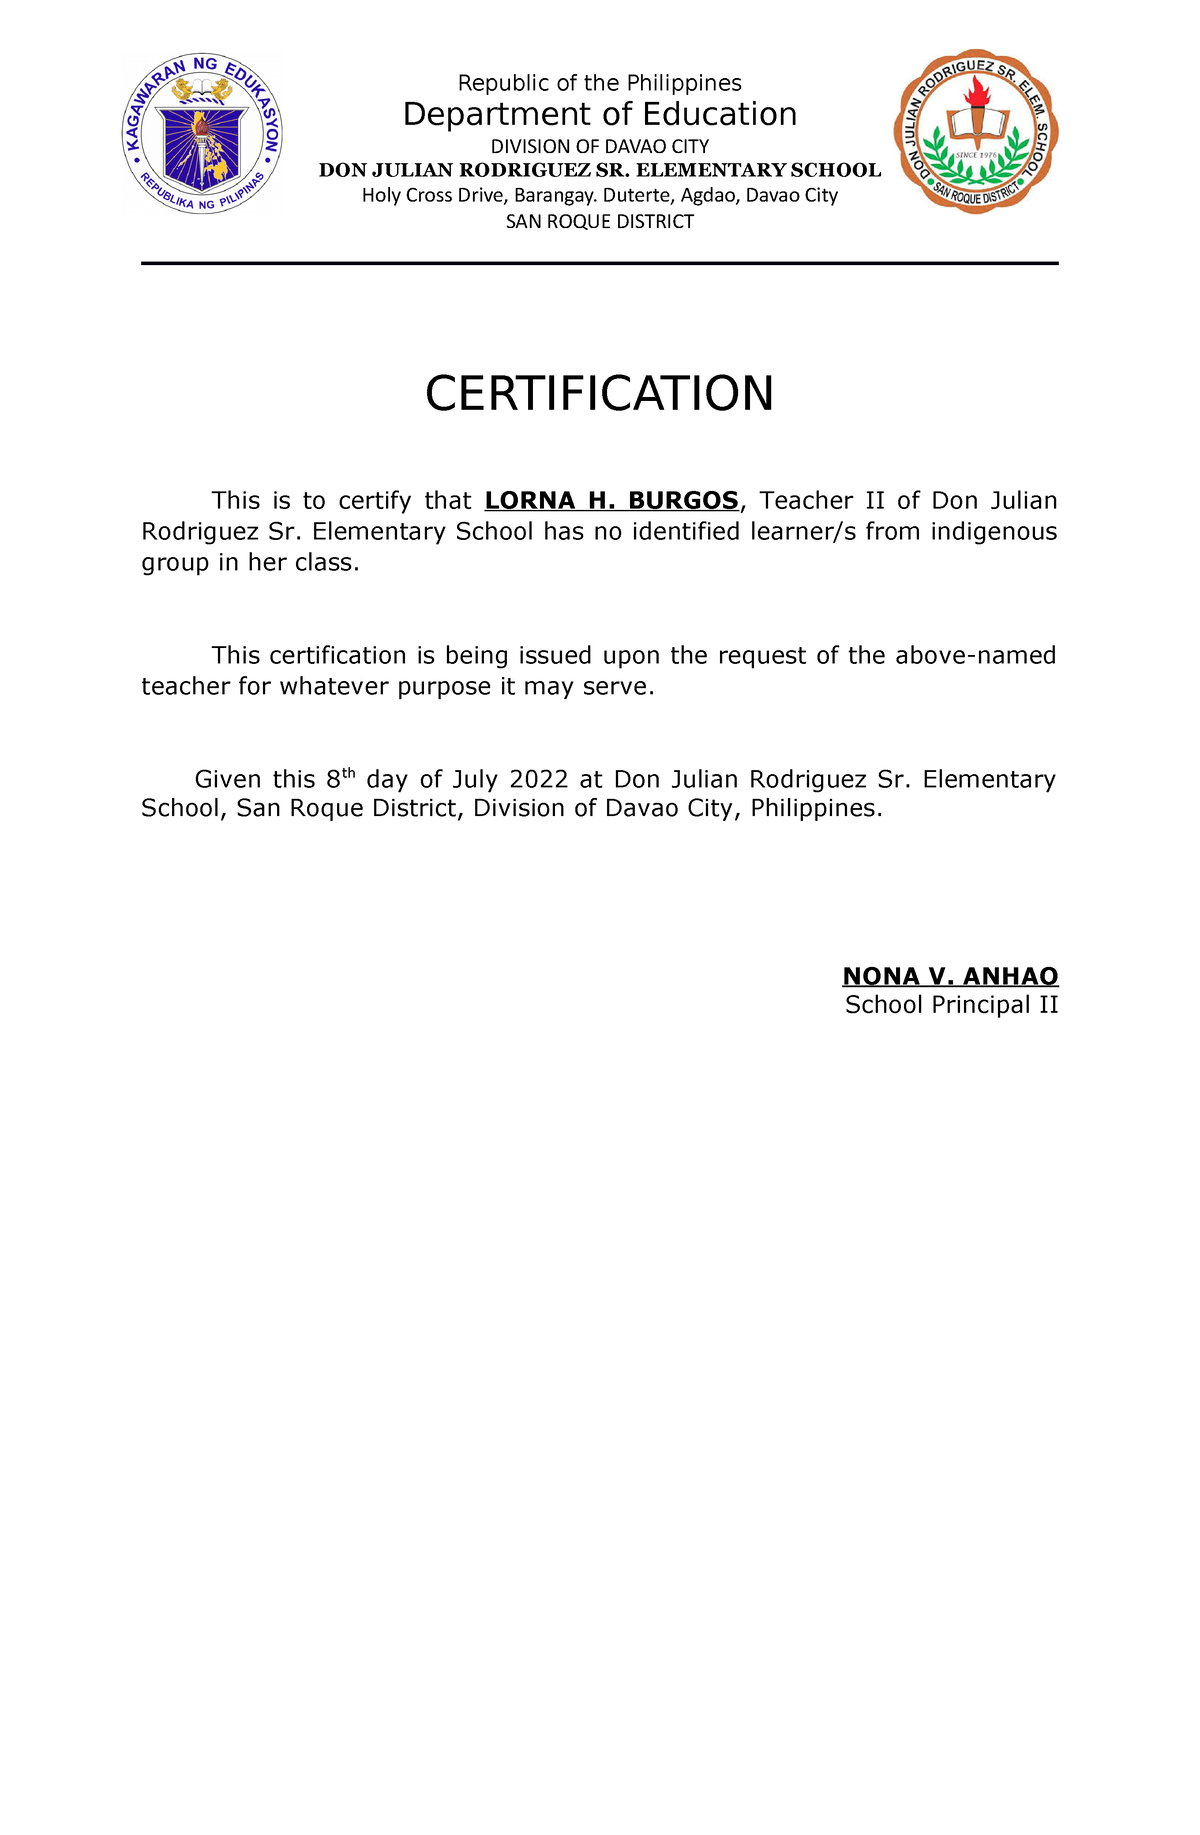 Certification of NO Identified Learner Diablities Indigenous